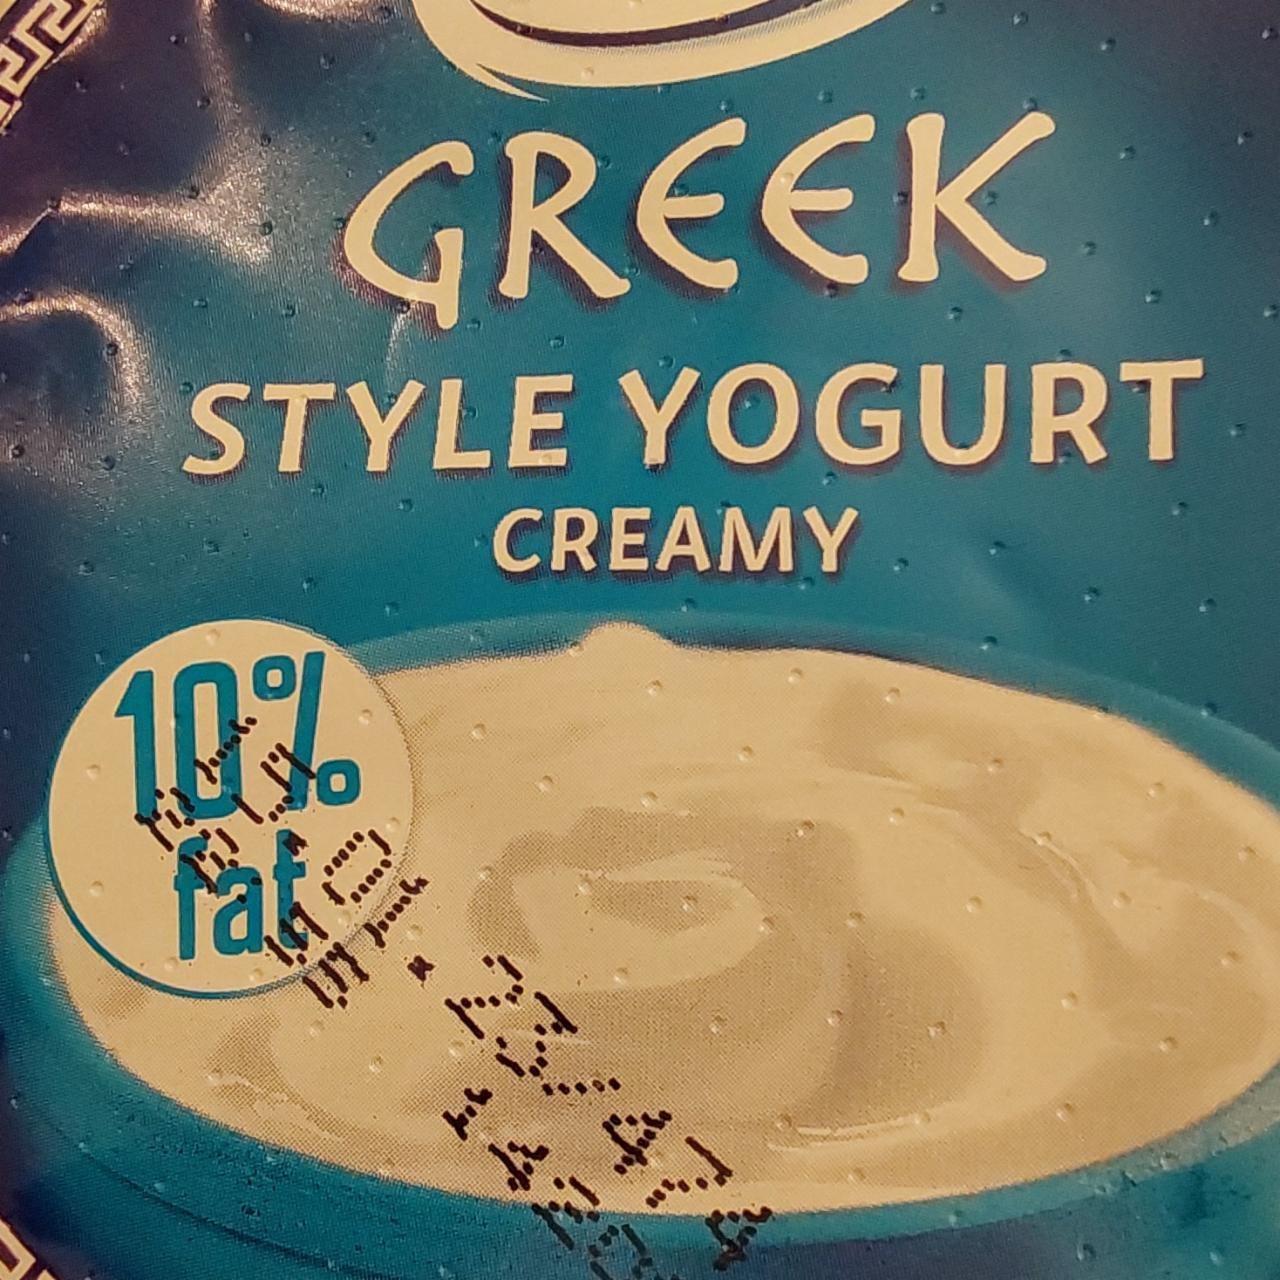 Képek - Görög joghurt Creamy 10% Pilos